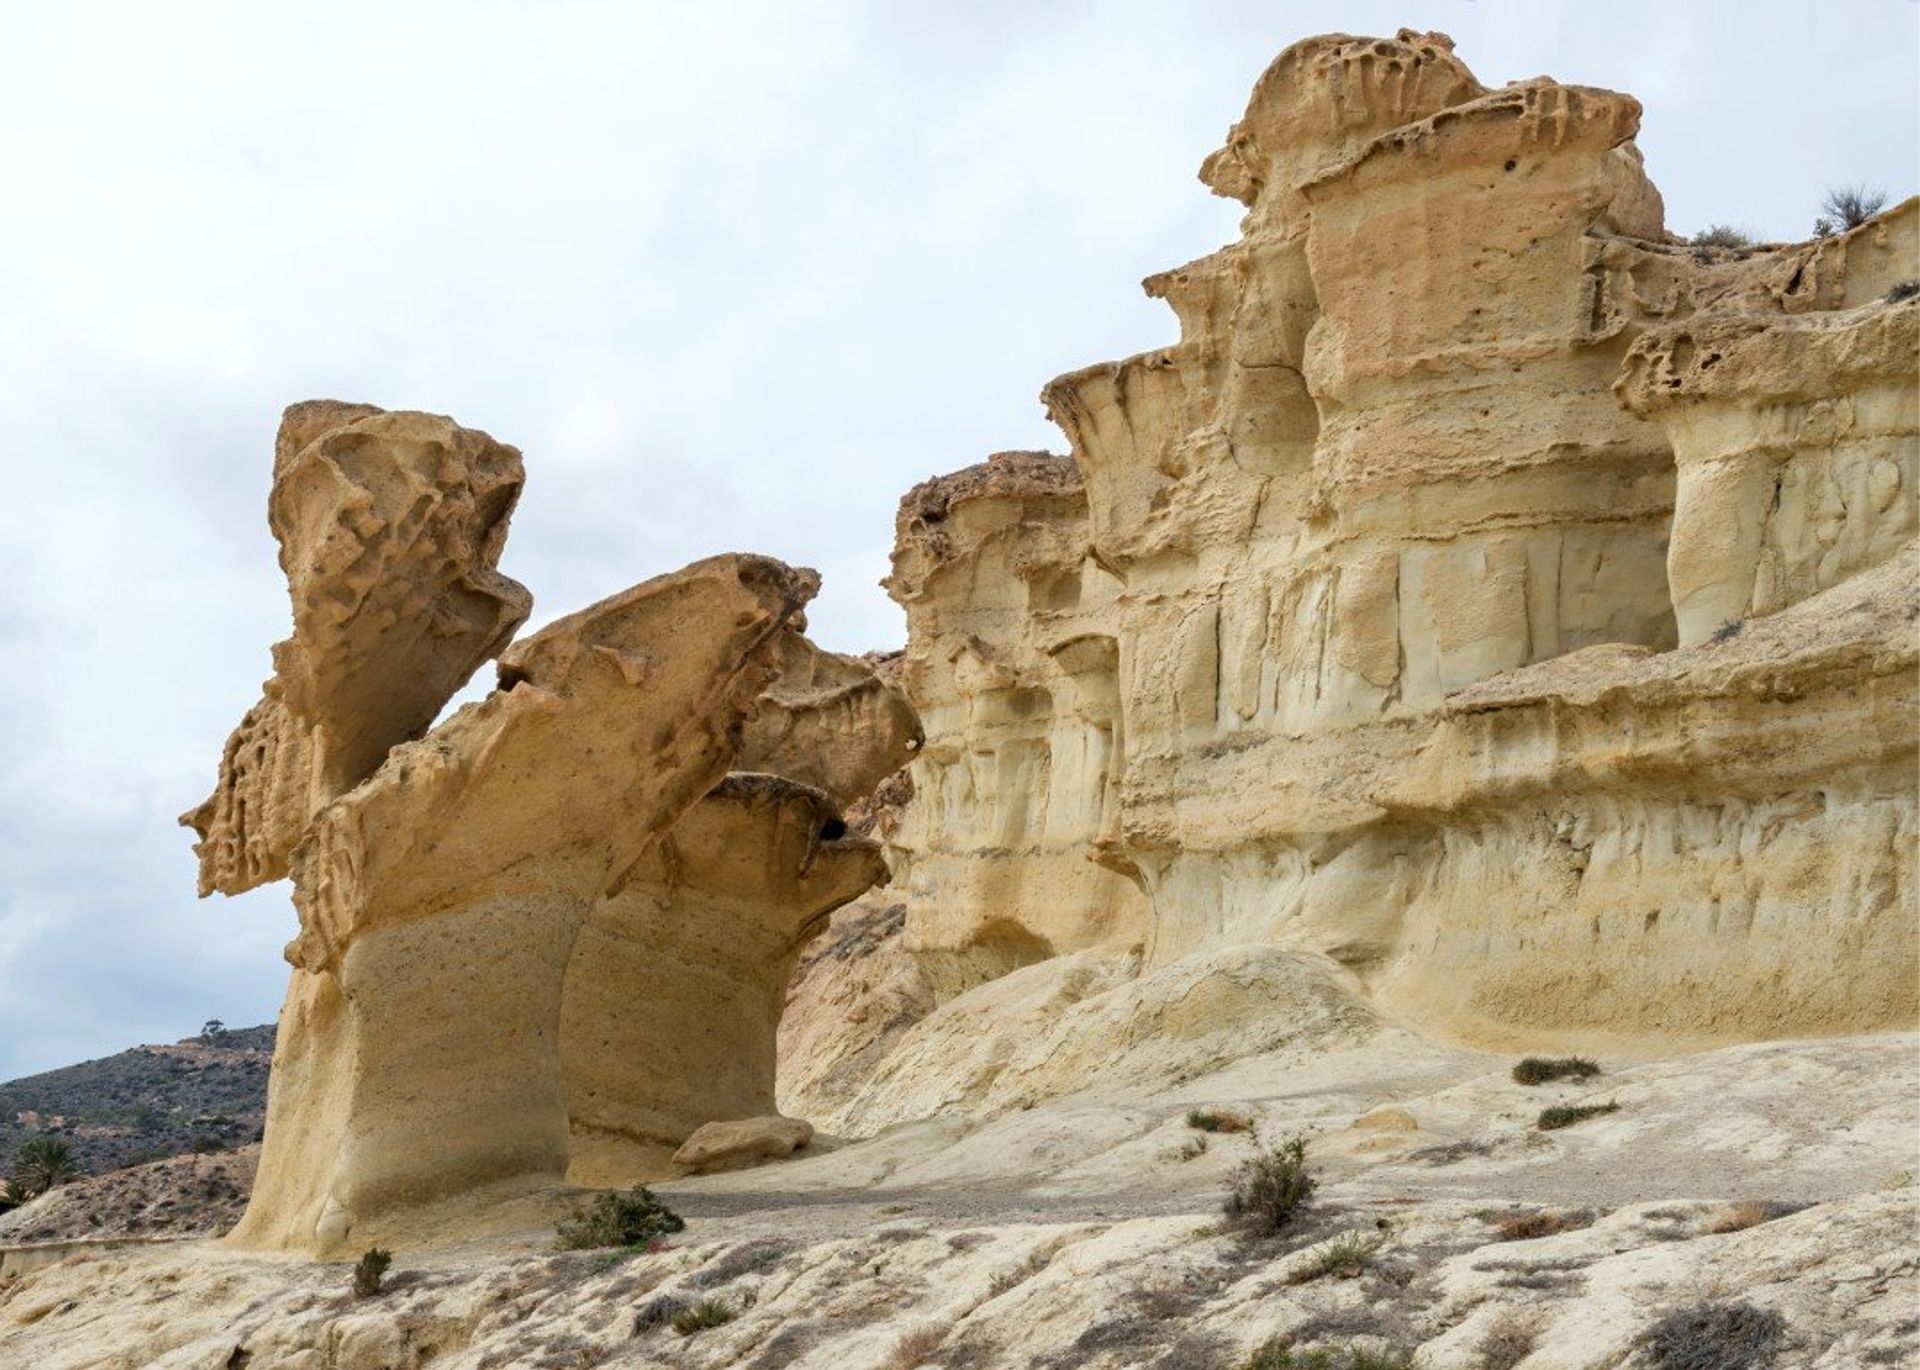 Las Gredas de Bolnuevo are beautiful formations of sandstone eroded over time